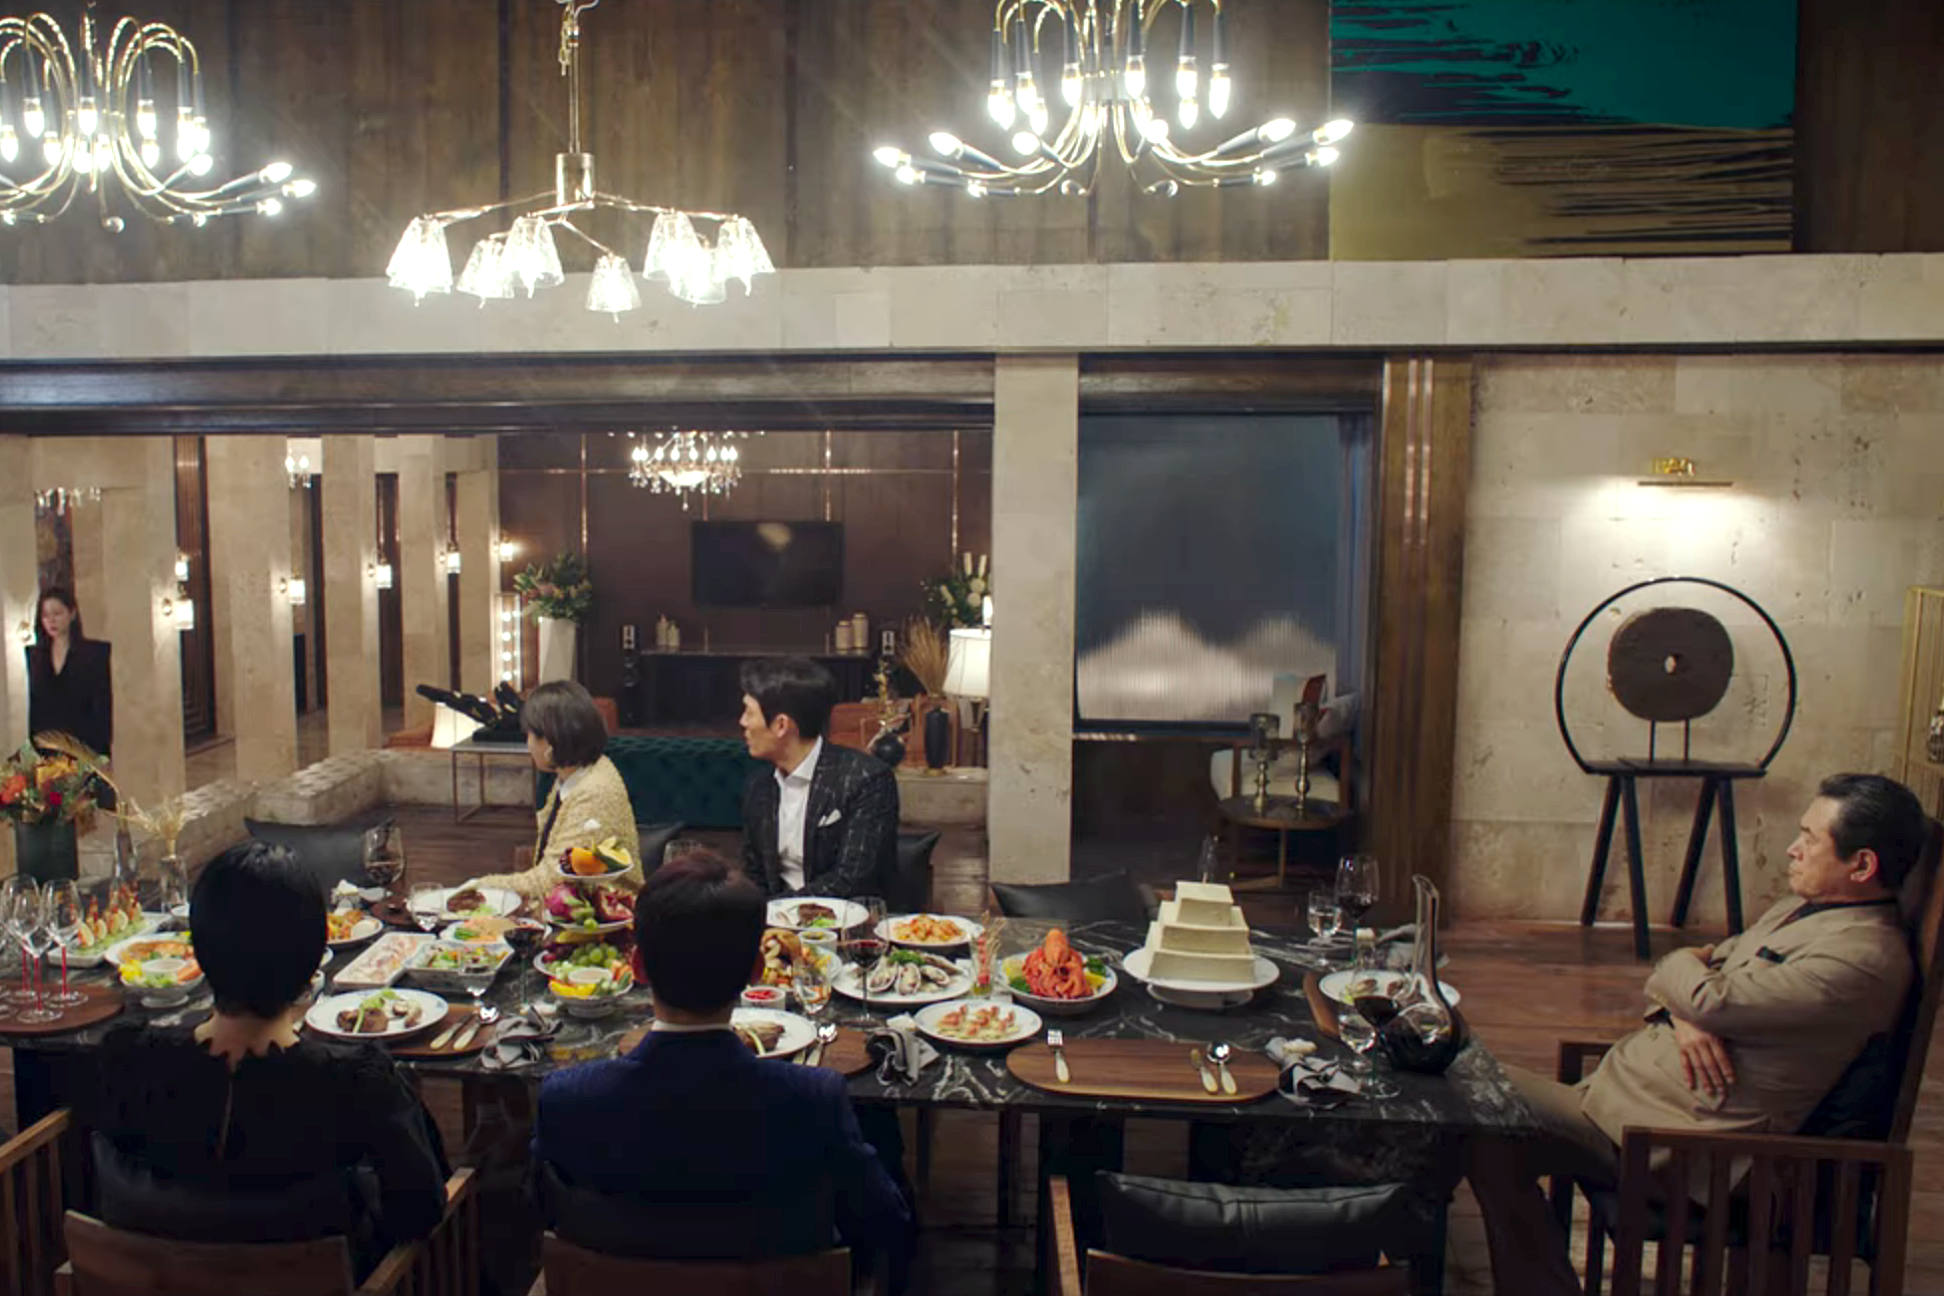 Table dinner in the k-drama Crash Landing on You